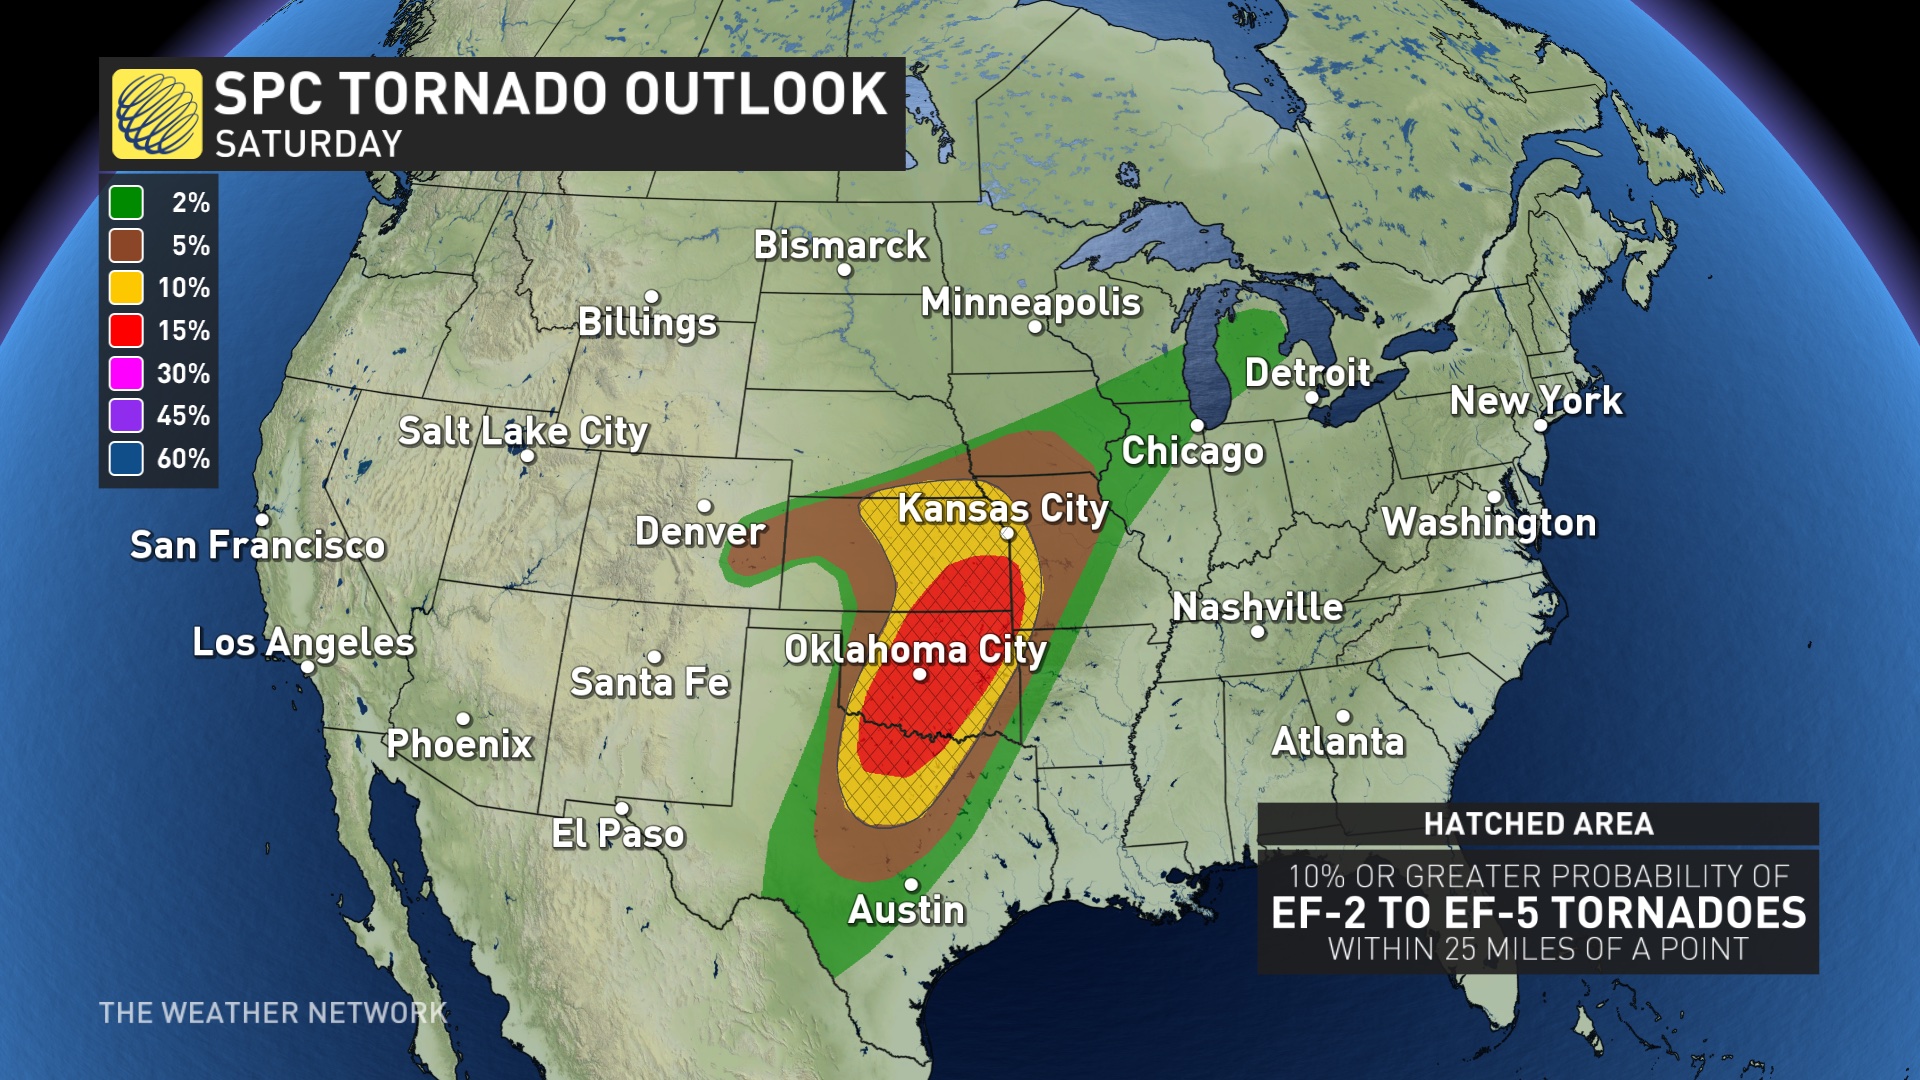 u.s tornado outbreak anticipated following major damage friday